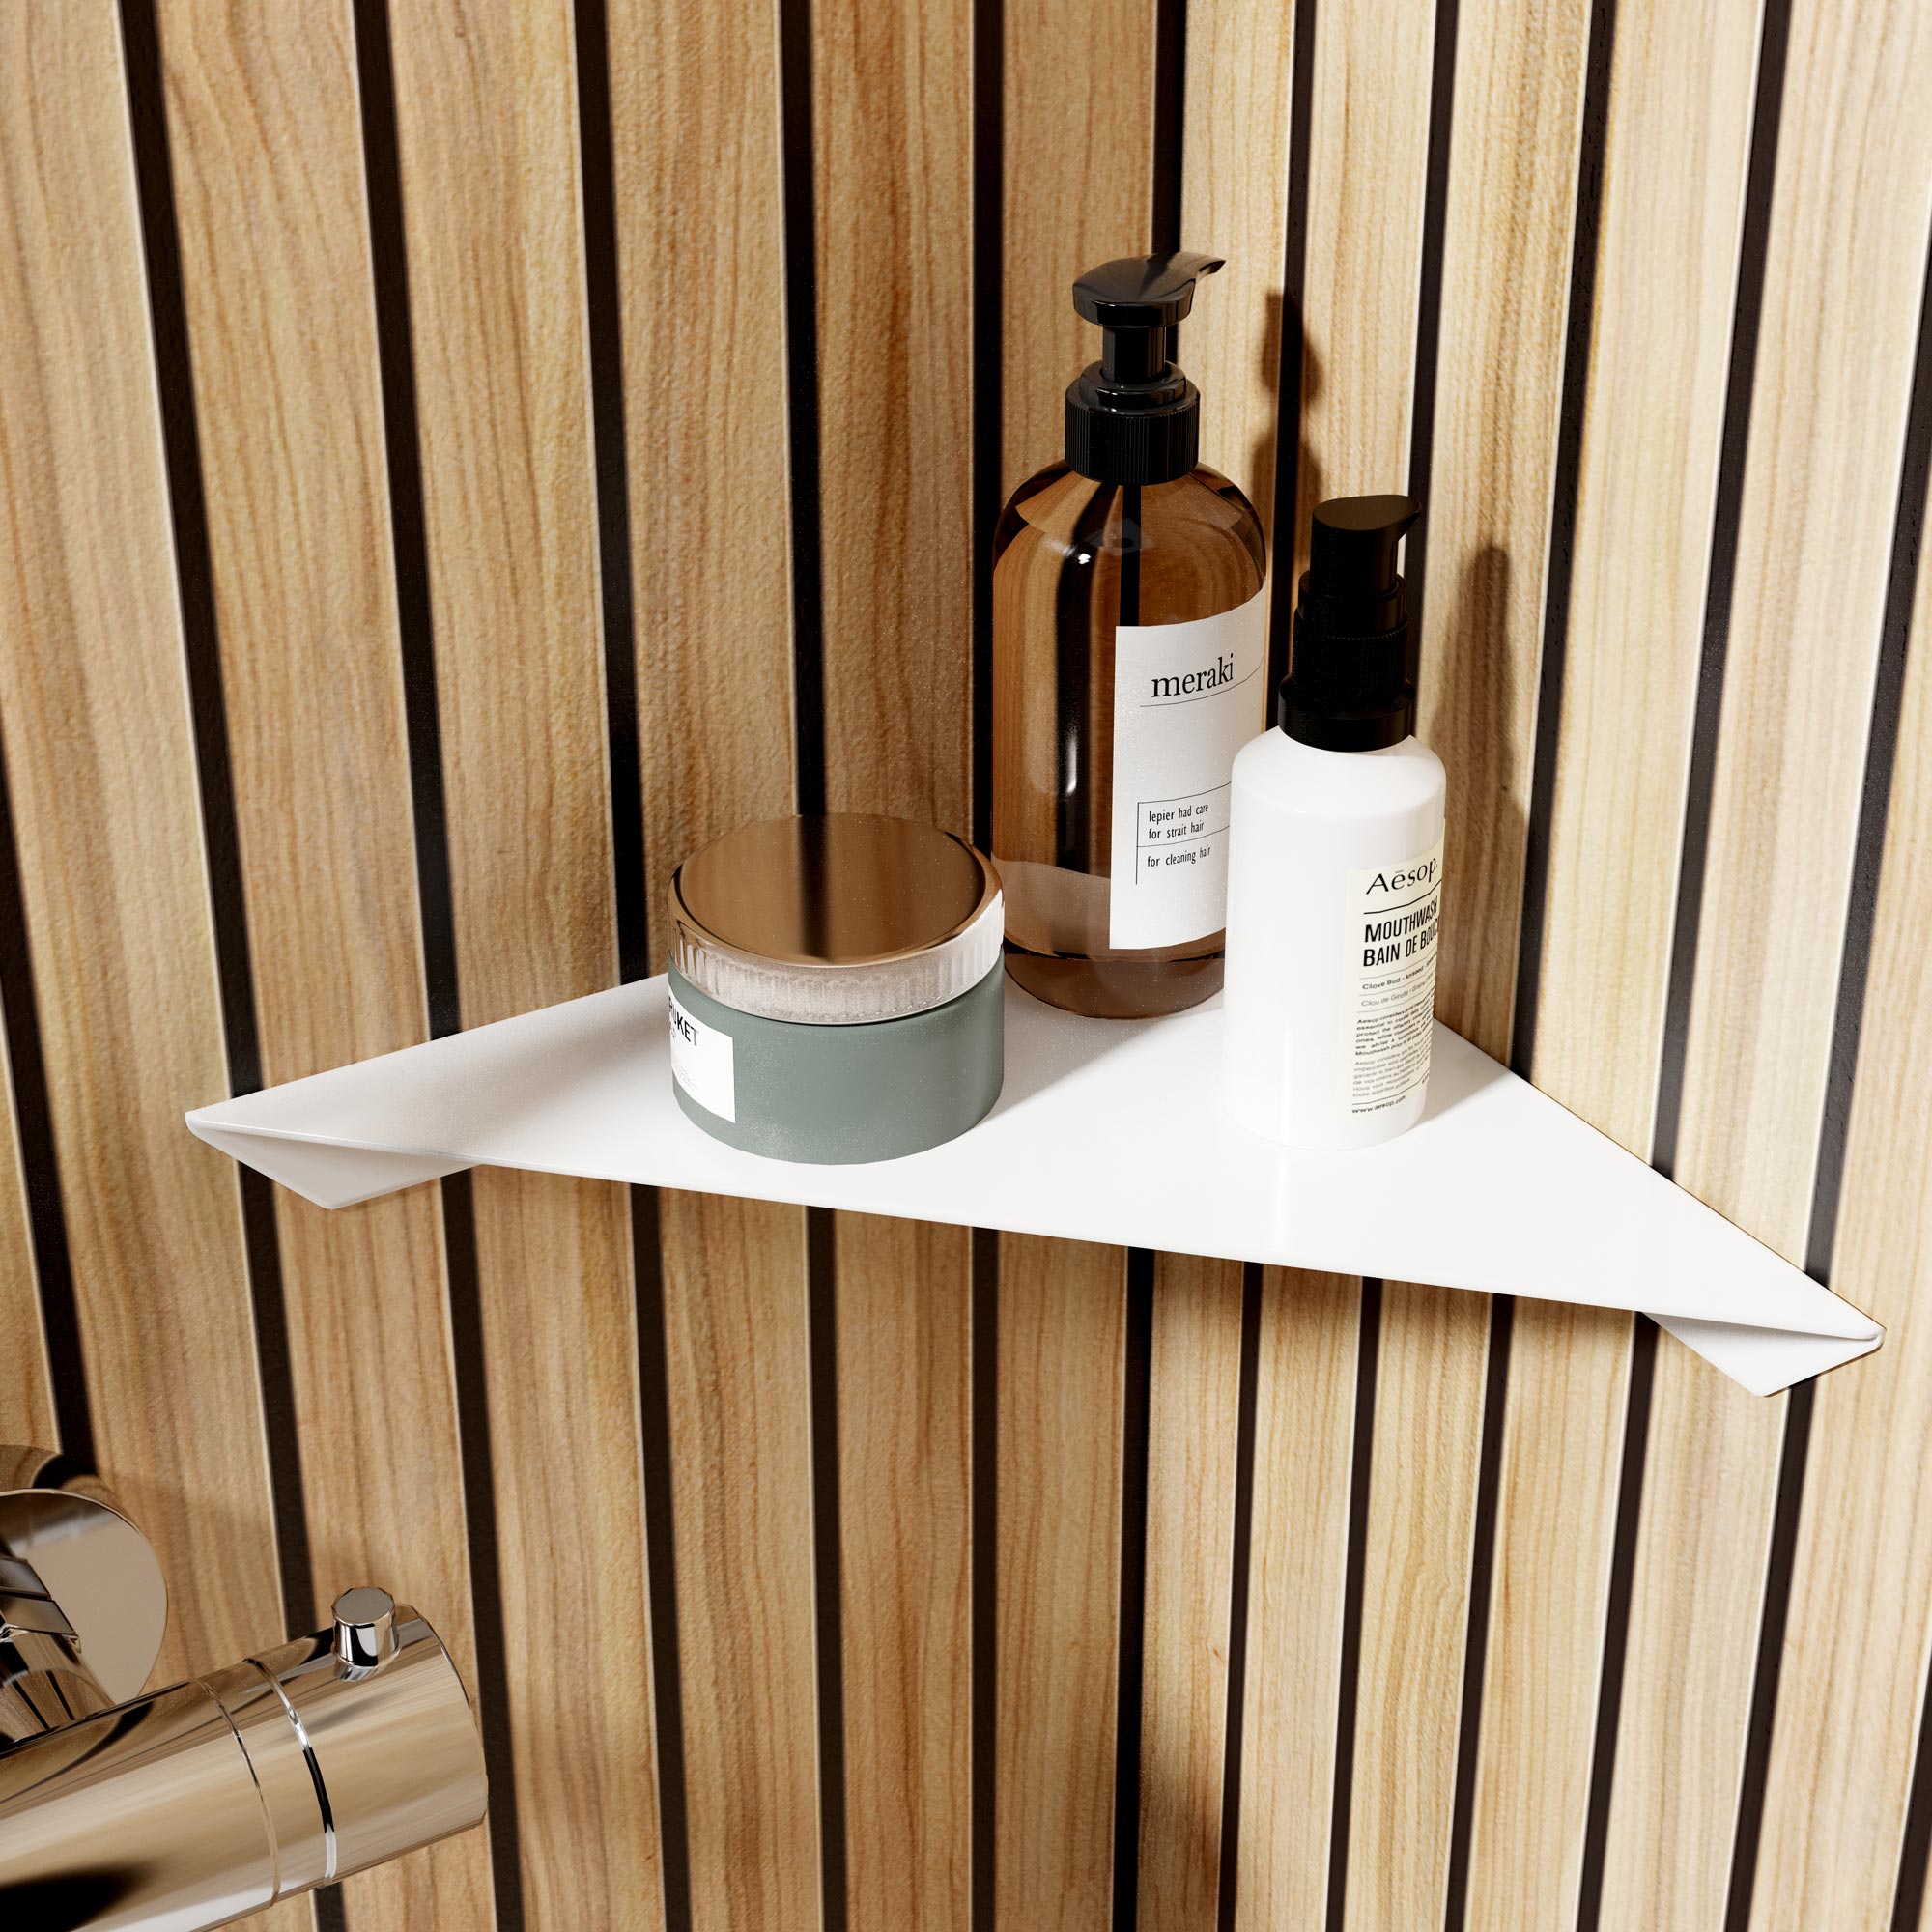 Schulte estante de ducha autoadhesiva, sin taladrar, 23 x 23 x 3,5 cm,  blanco mate, almacenamiento para la ducha